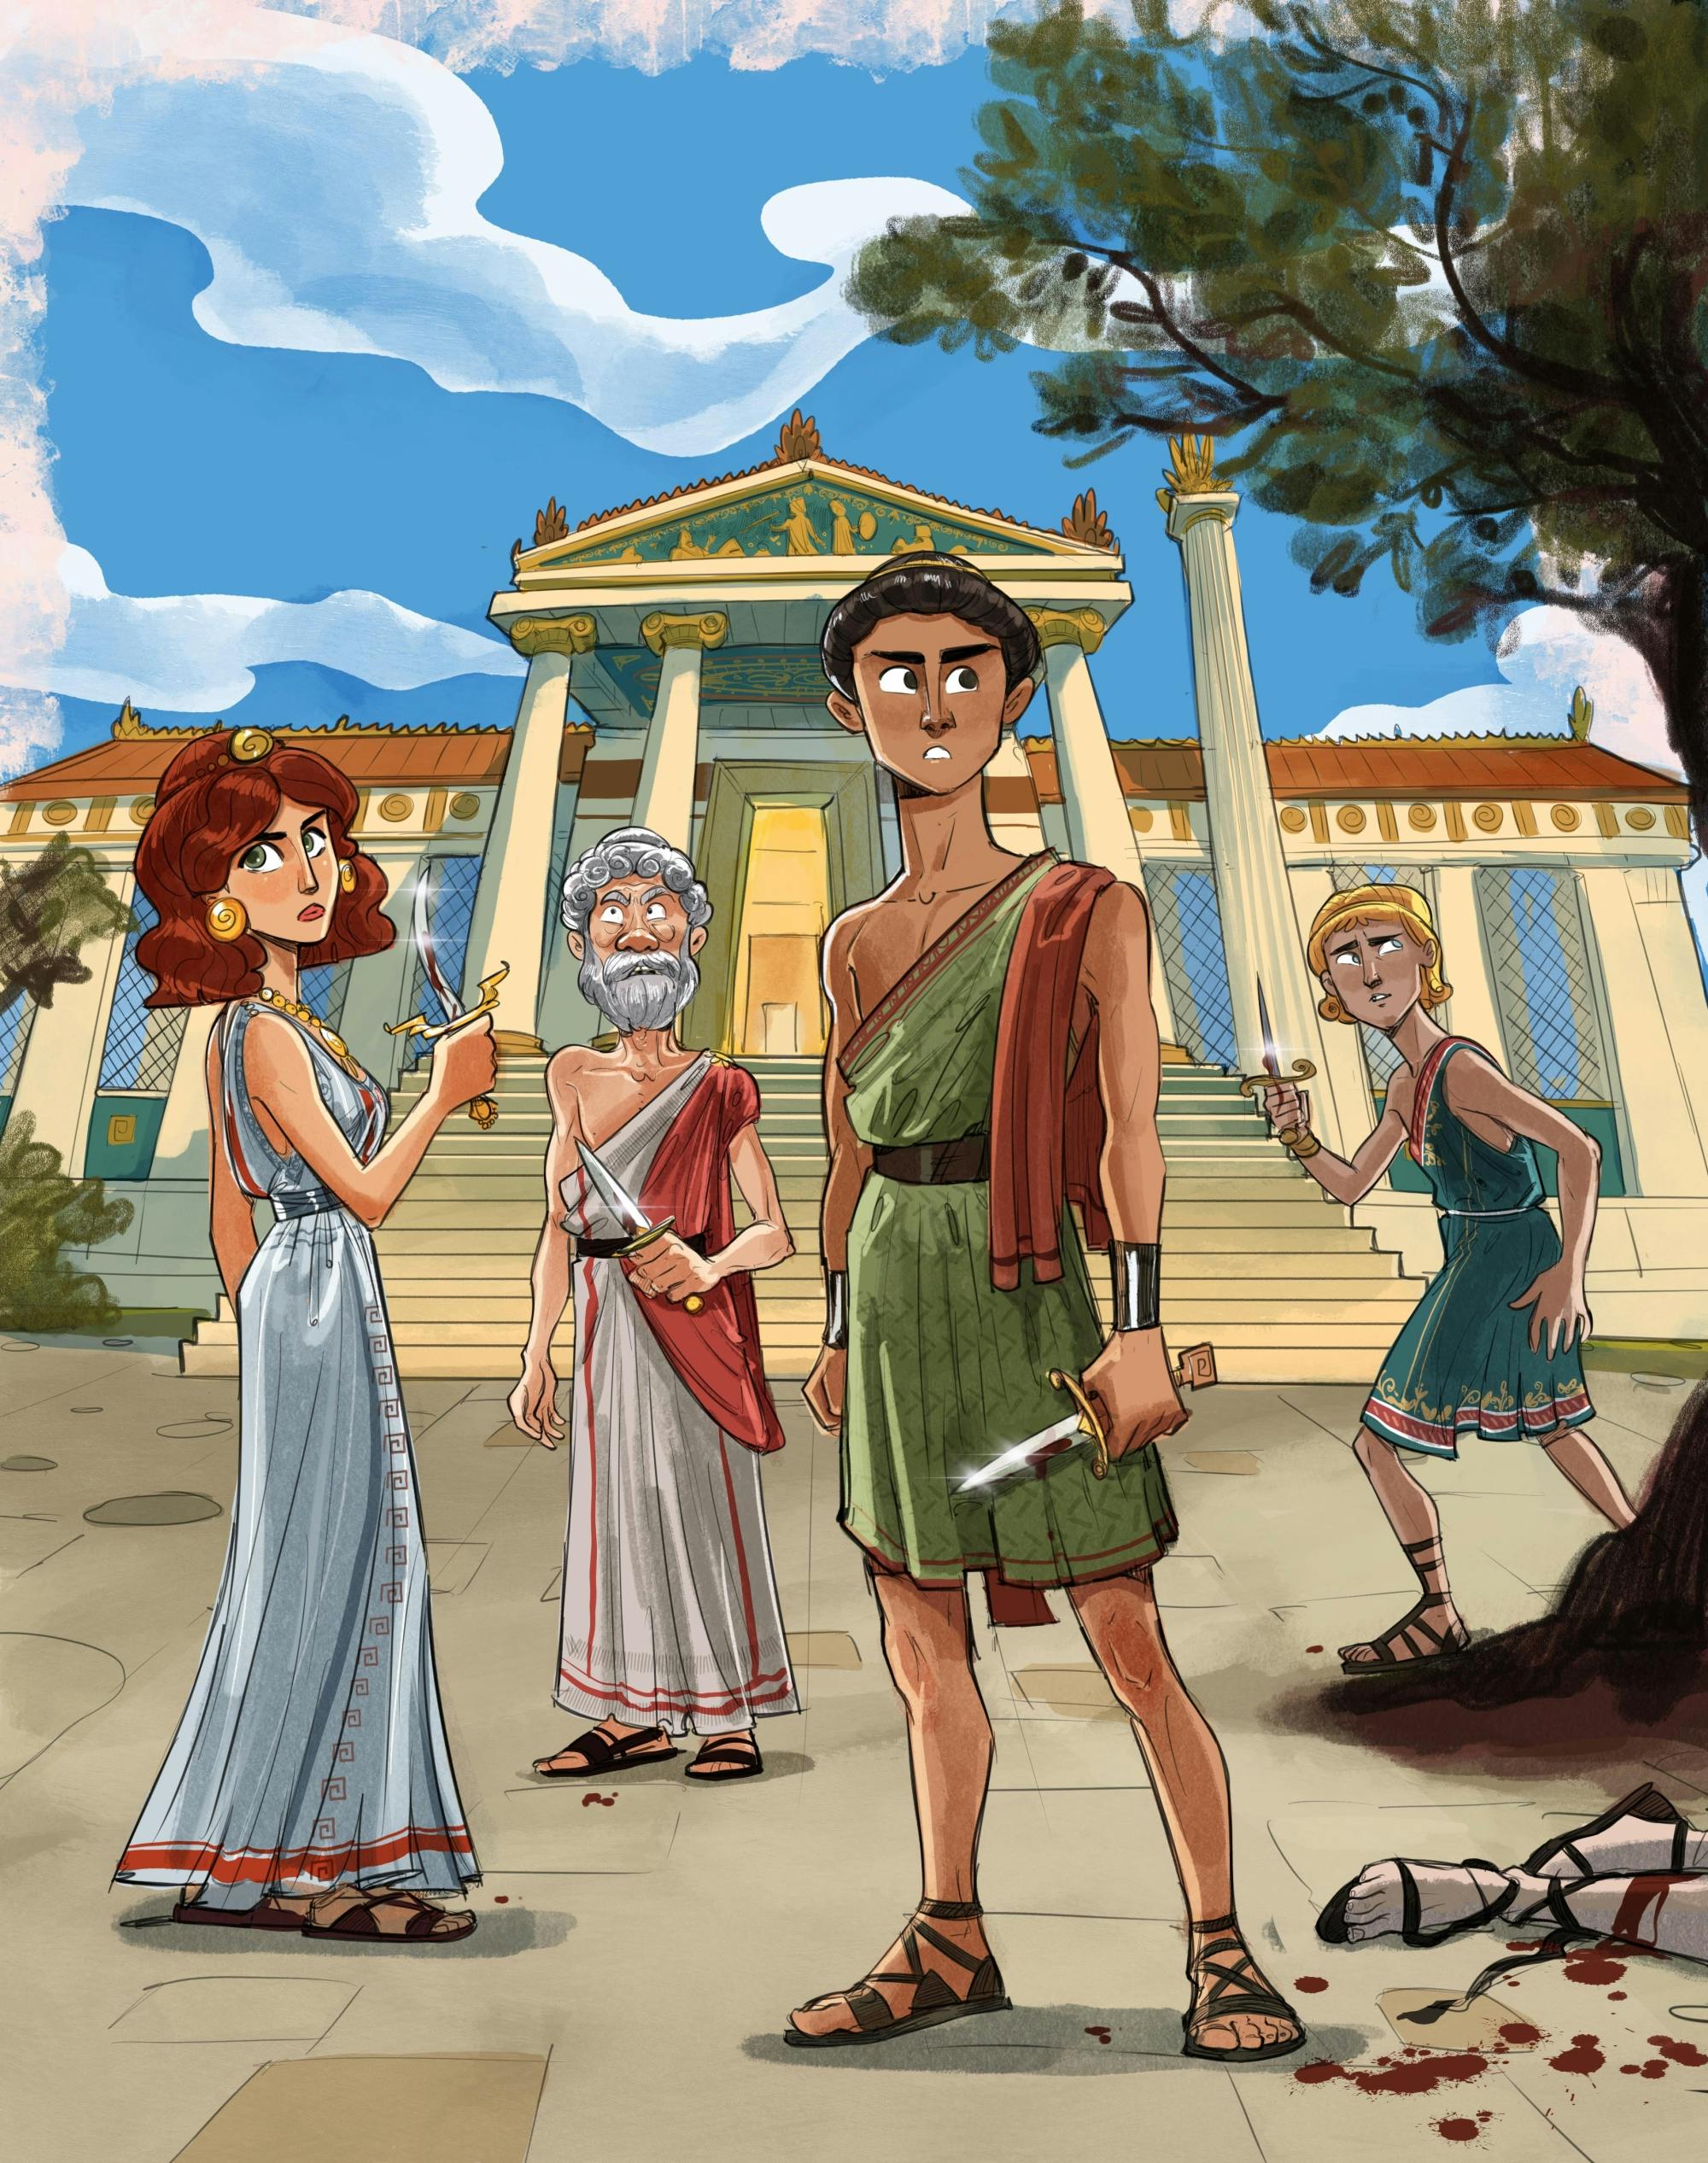 Juego interactivo en vivo de misterio de asesinato griego antiguo en Atenas